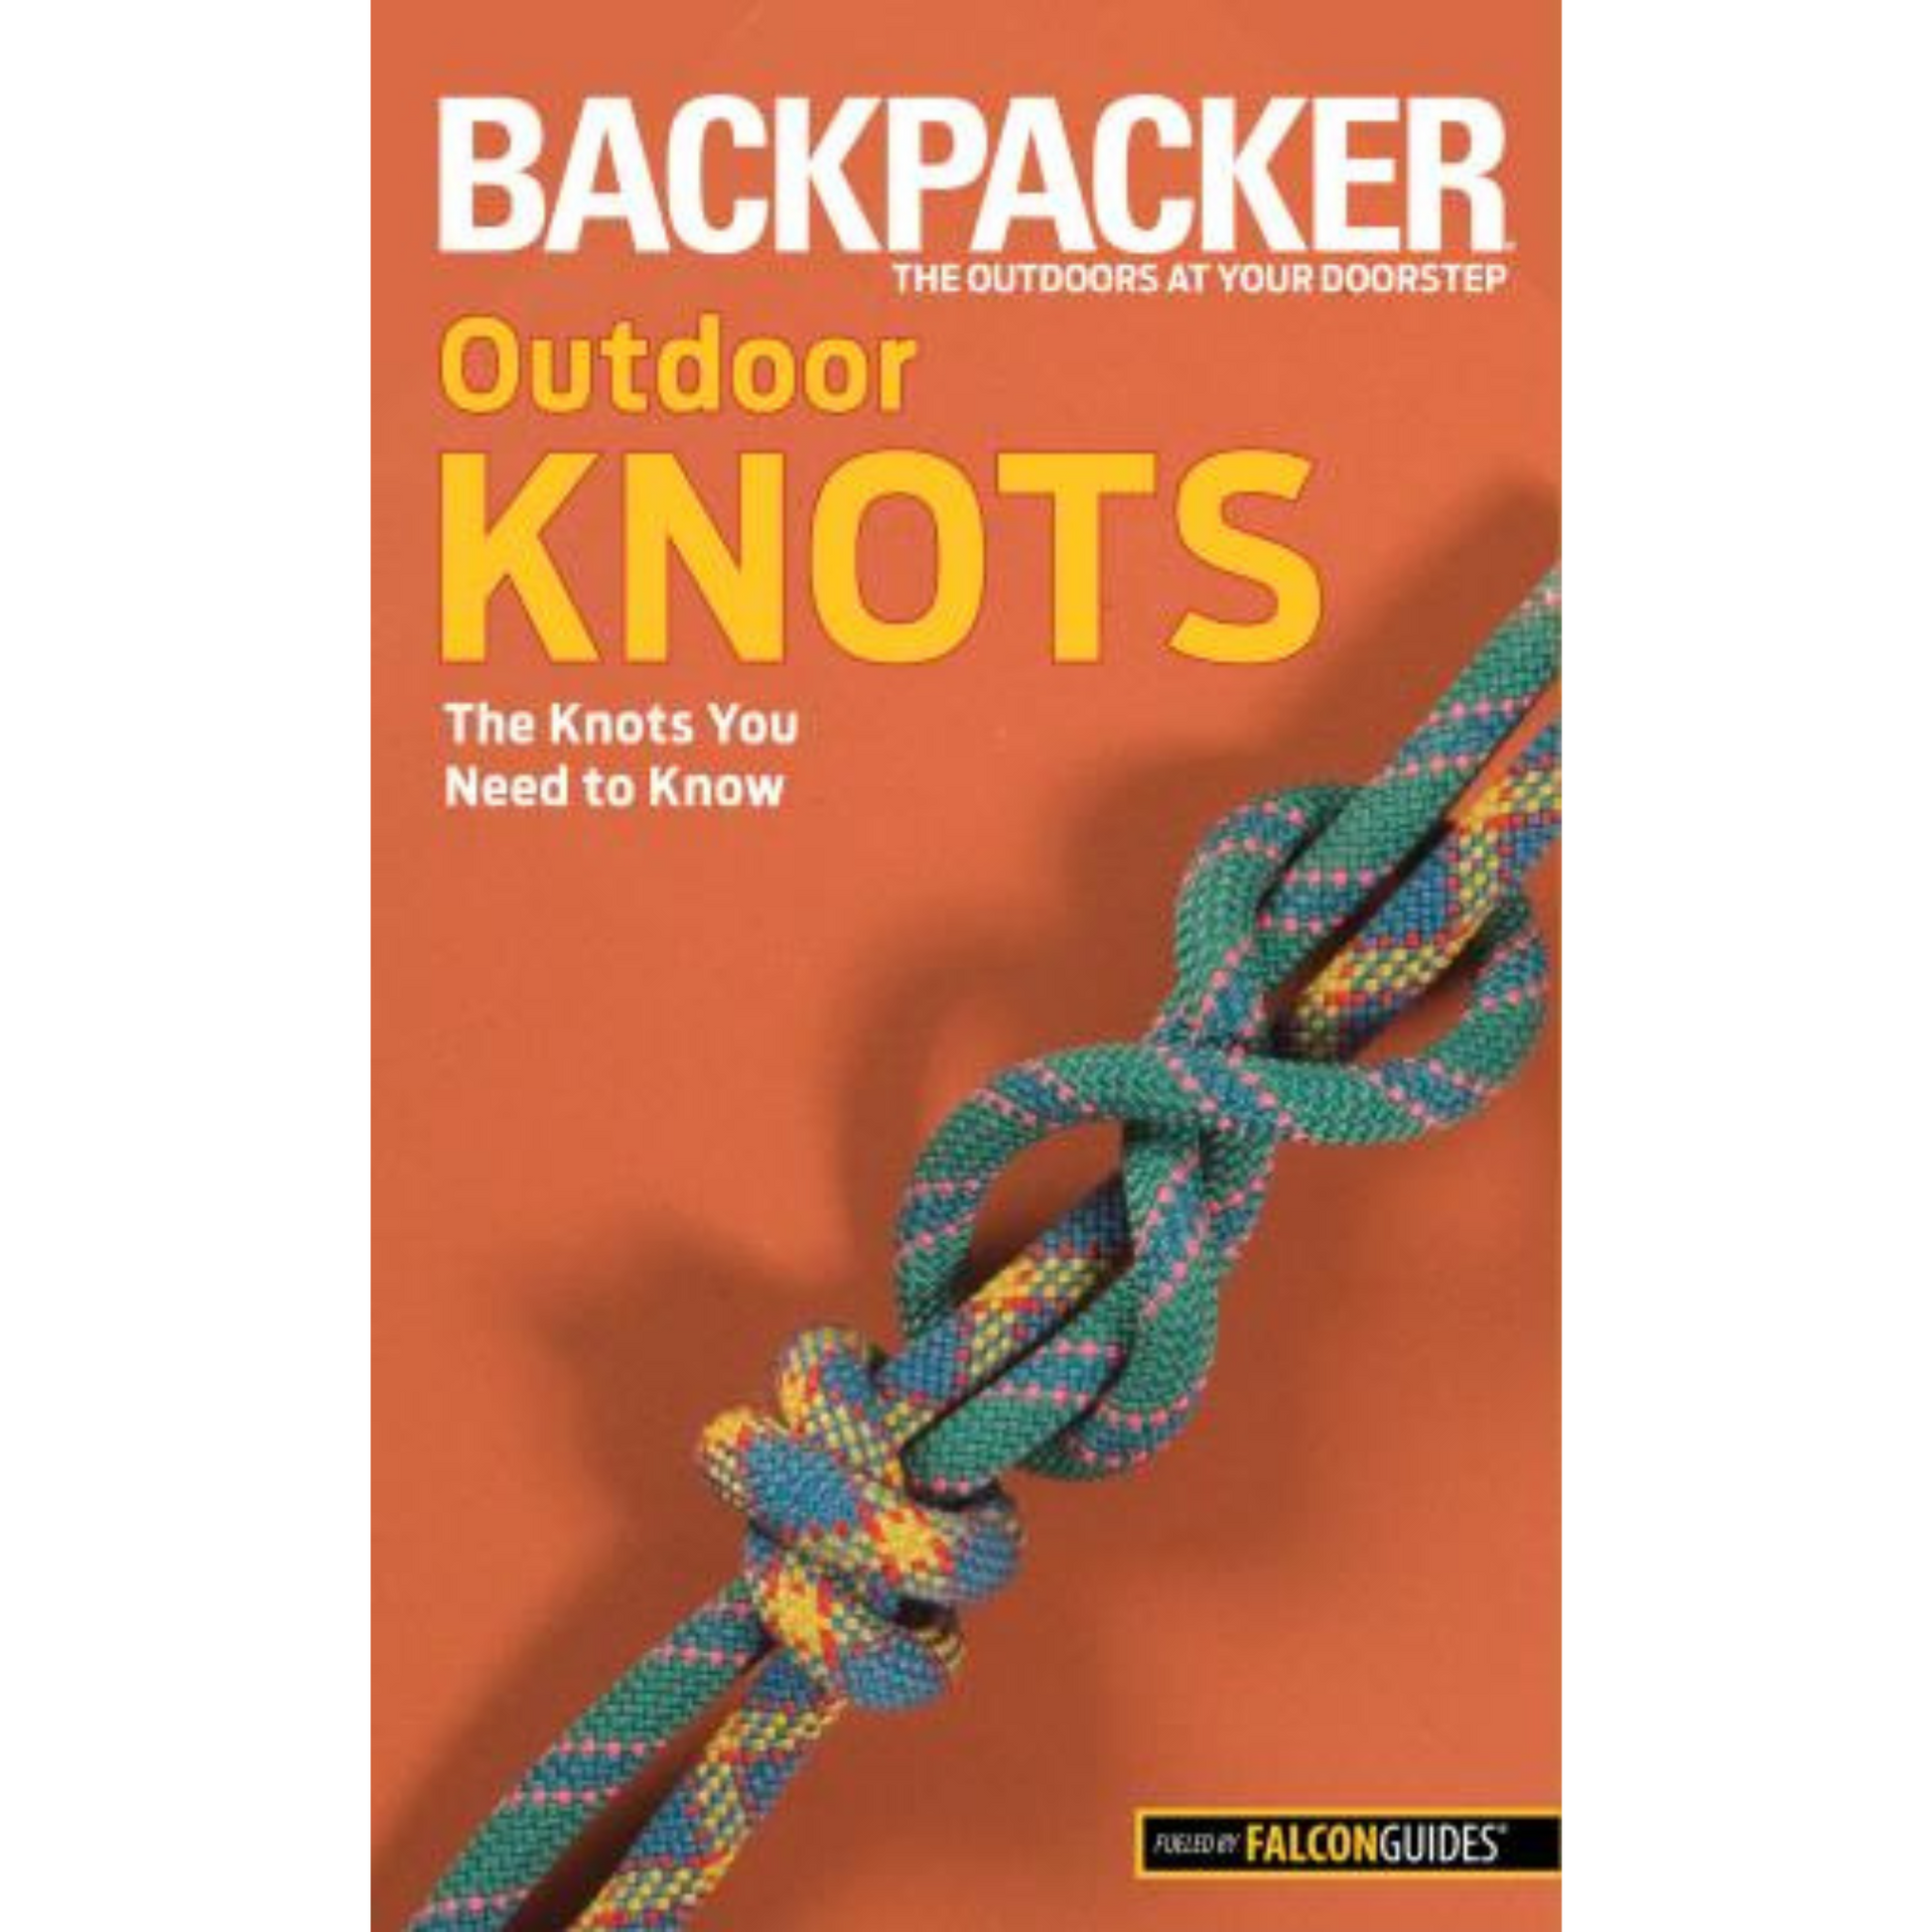 Backpacker magazine's Outdoor Knots